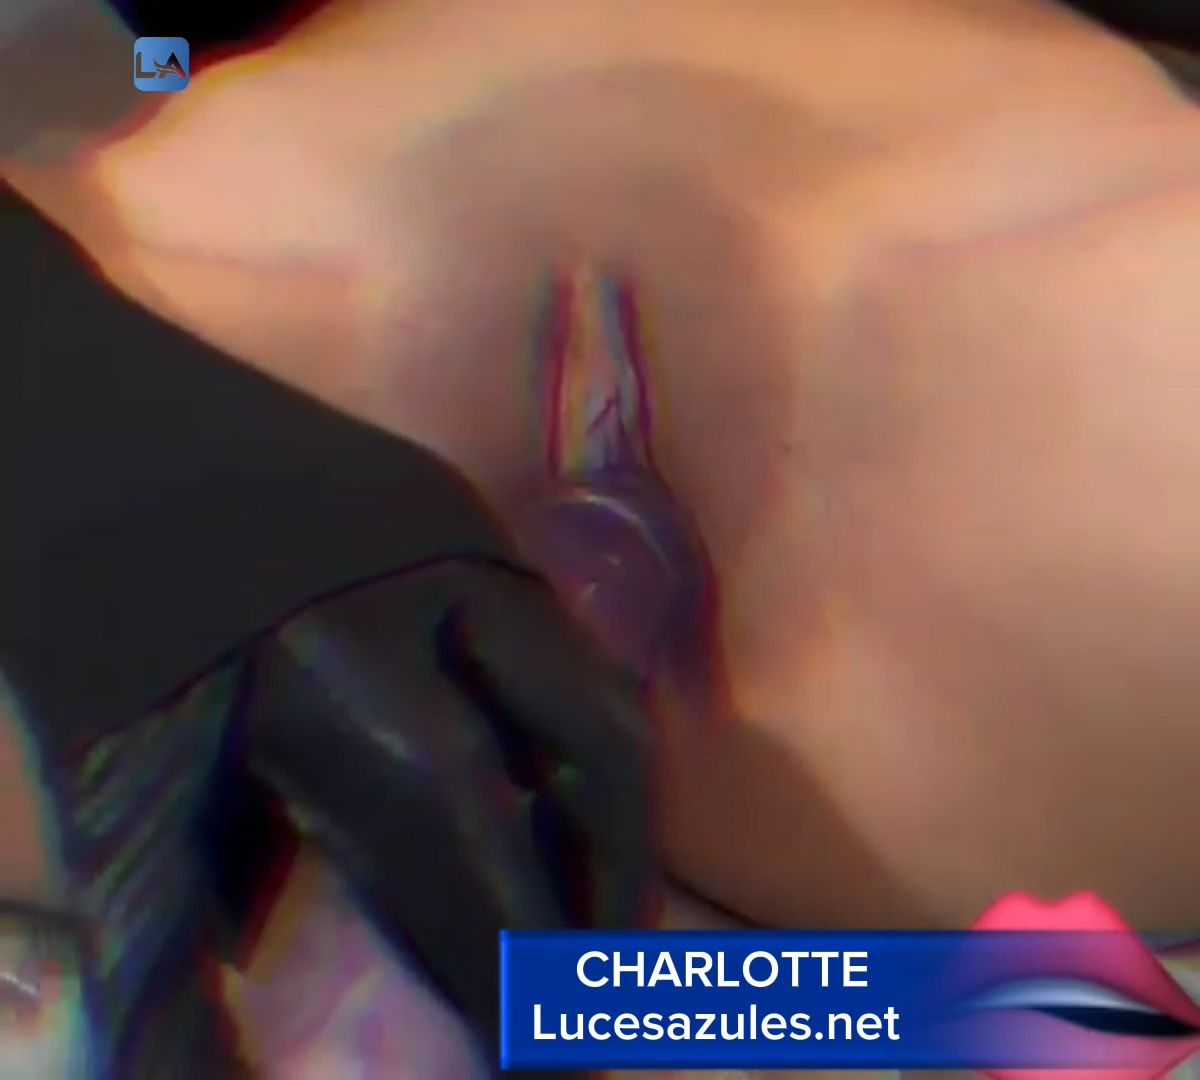 Charlotte - Dildo